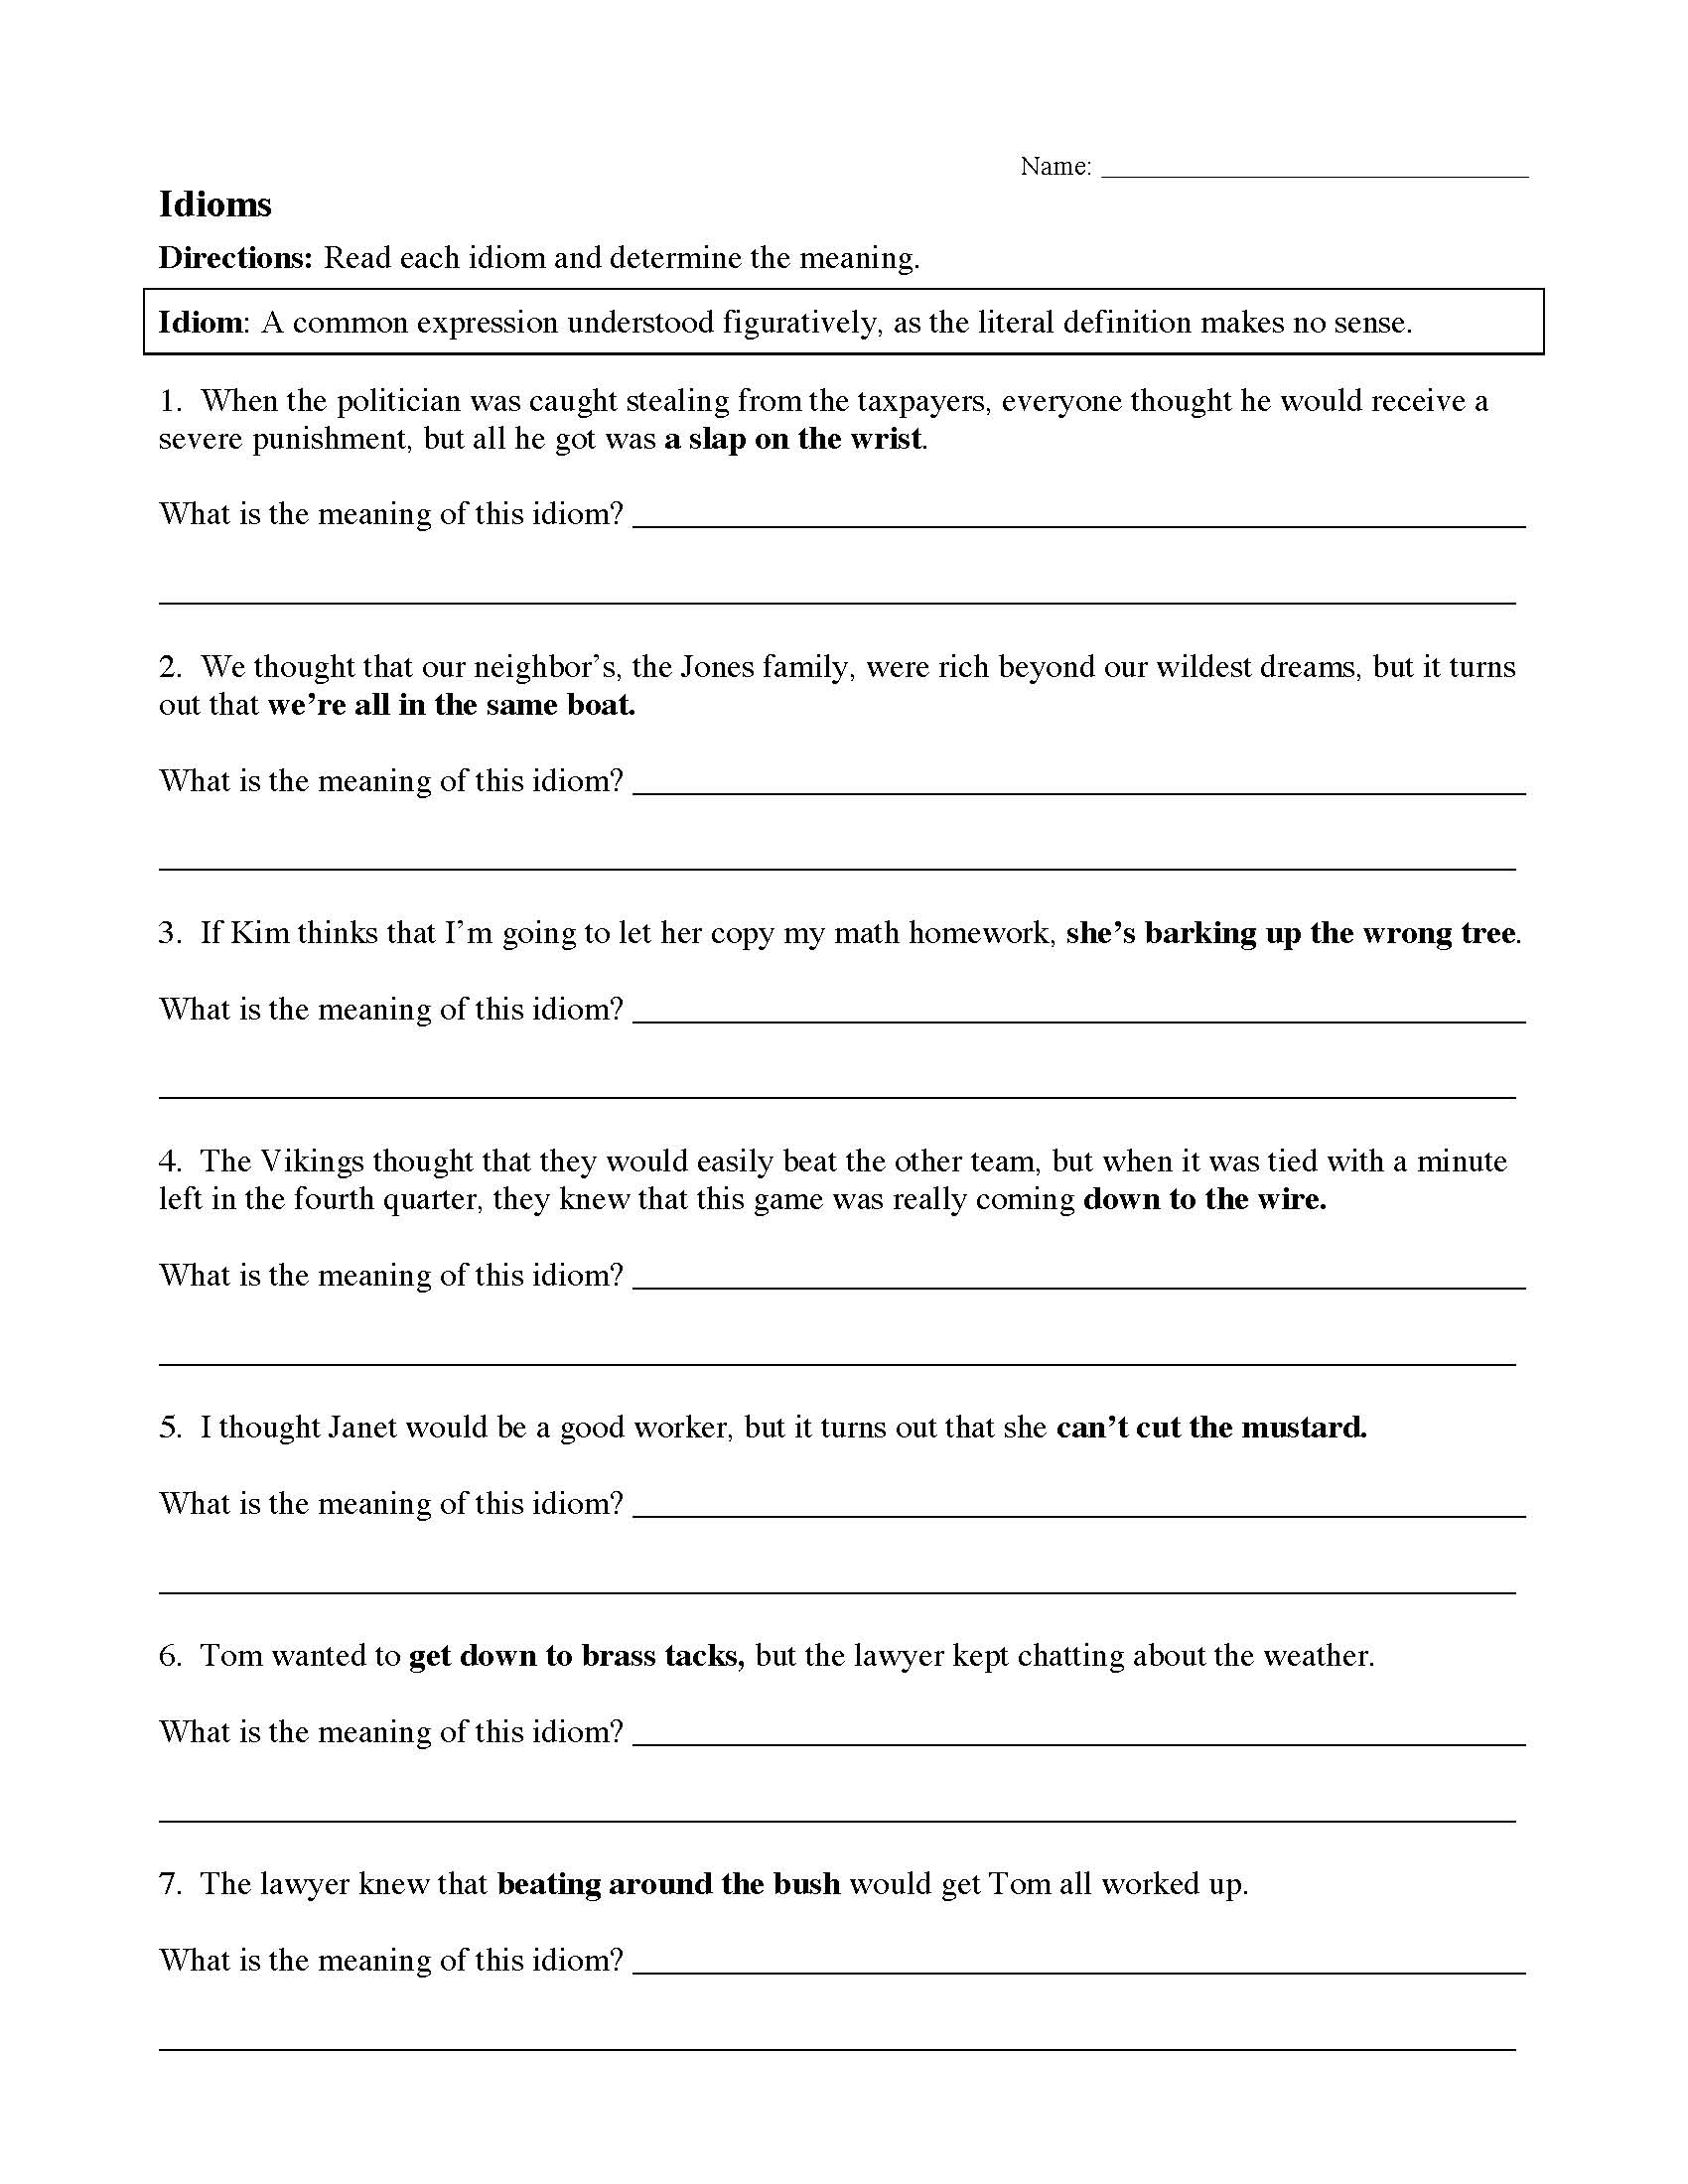 idiom-worksheets-tests-figurative-language-activities